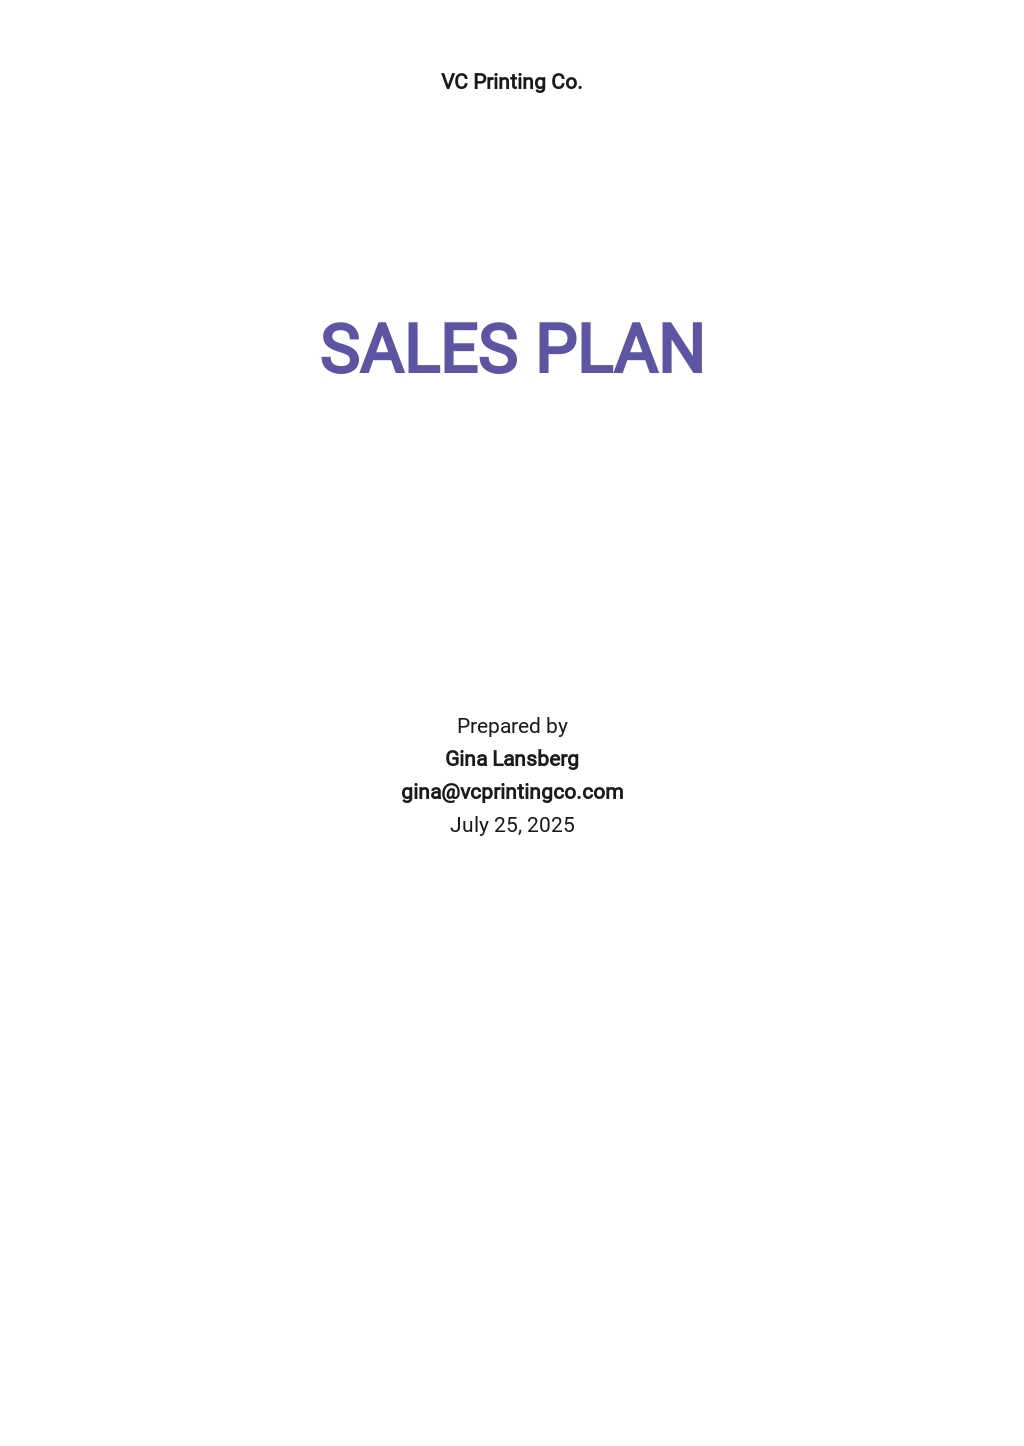 printing service business plan pdf